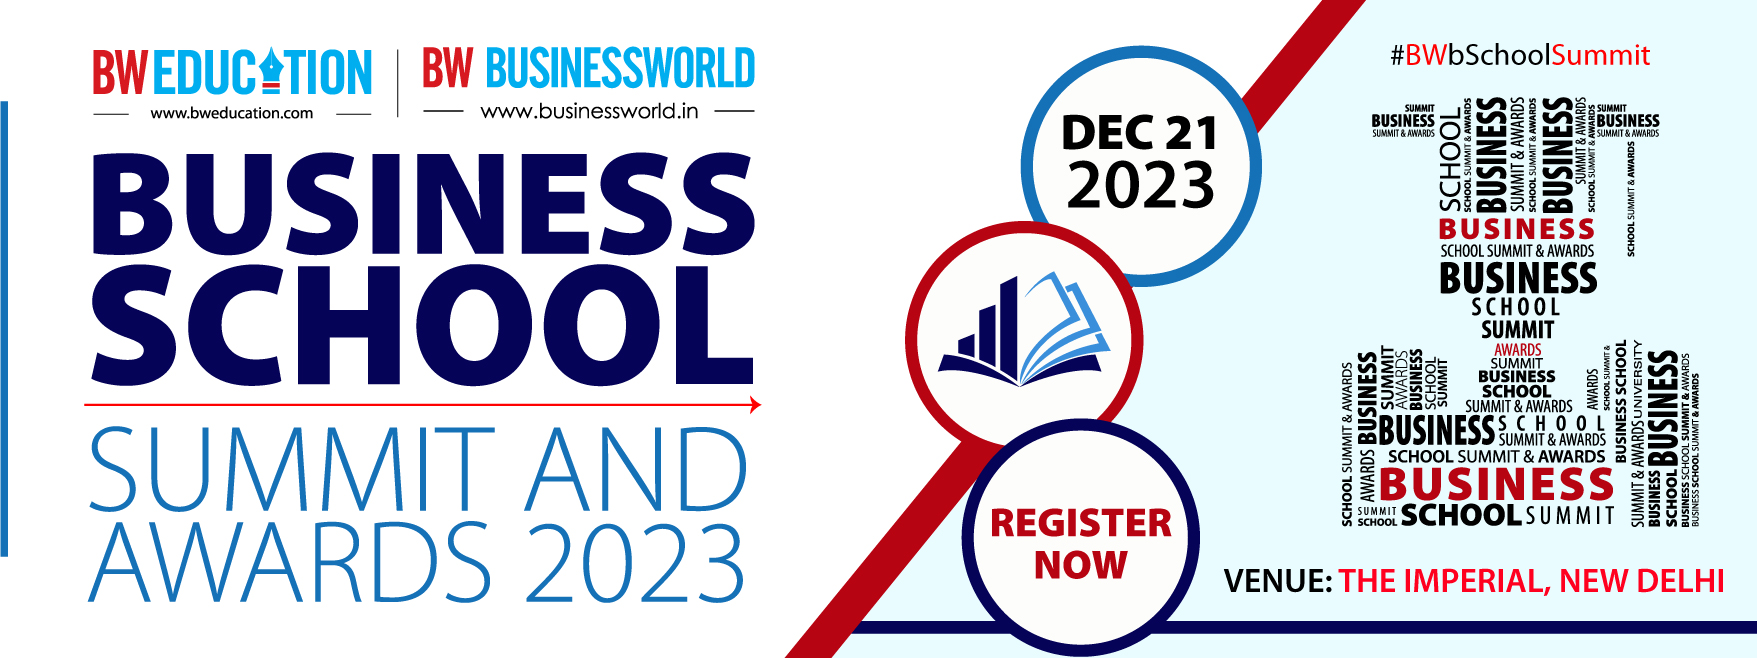 BW Education Business School Summit 2023